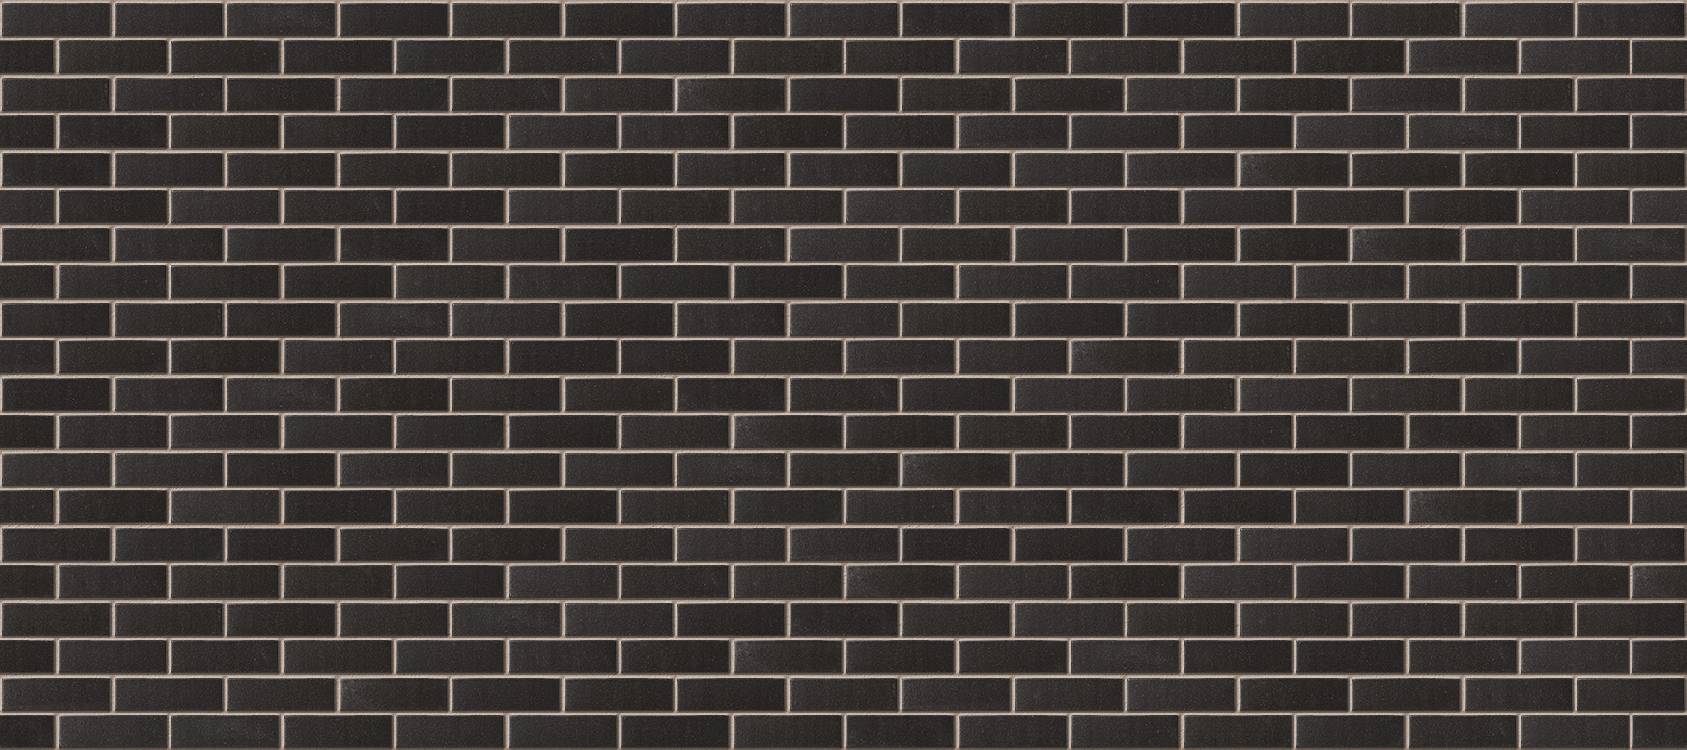 Clapton - Clay brick